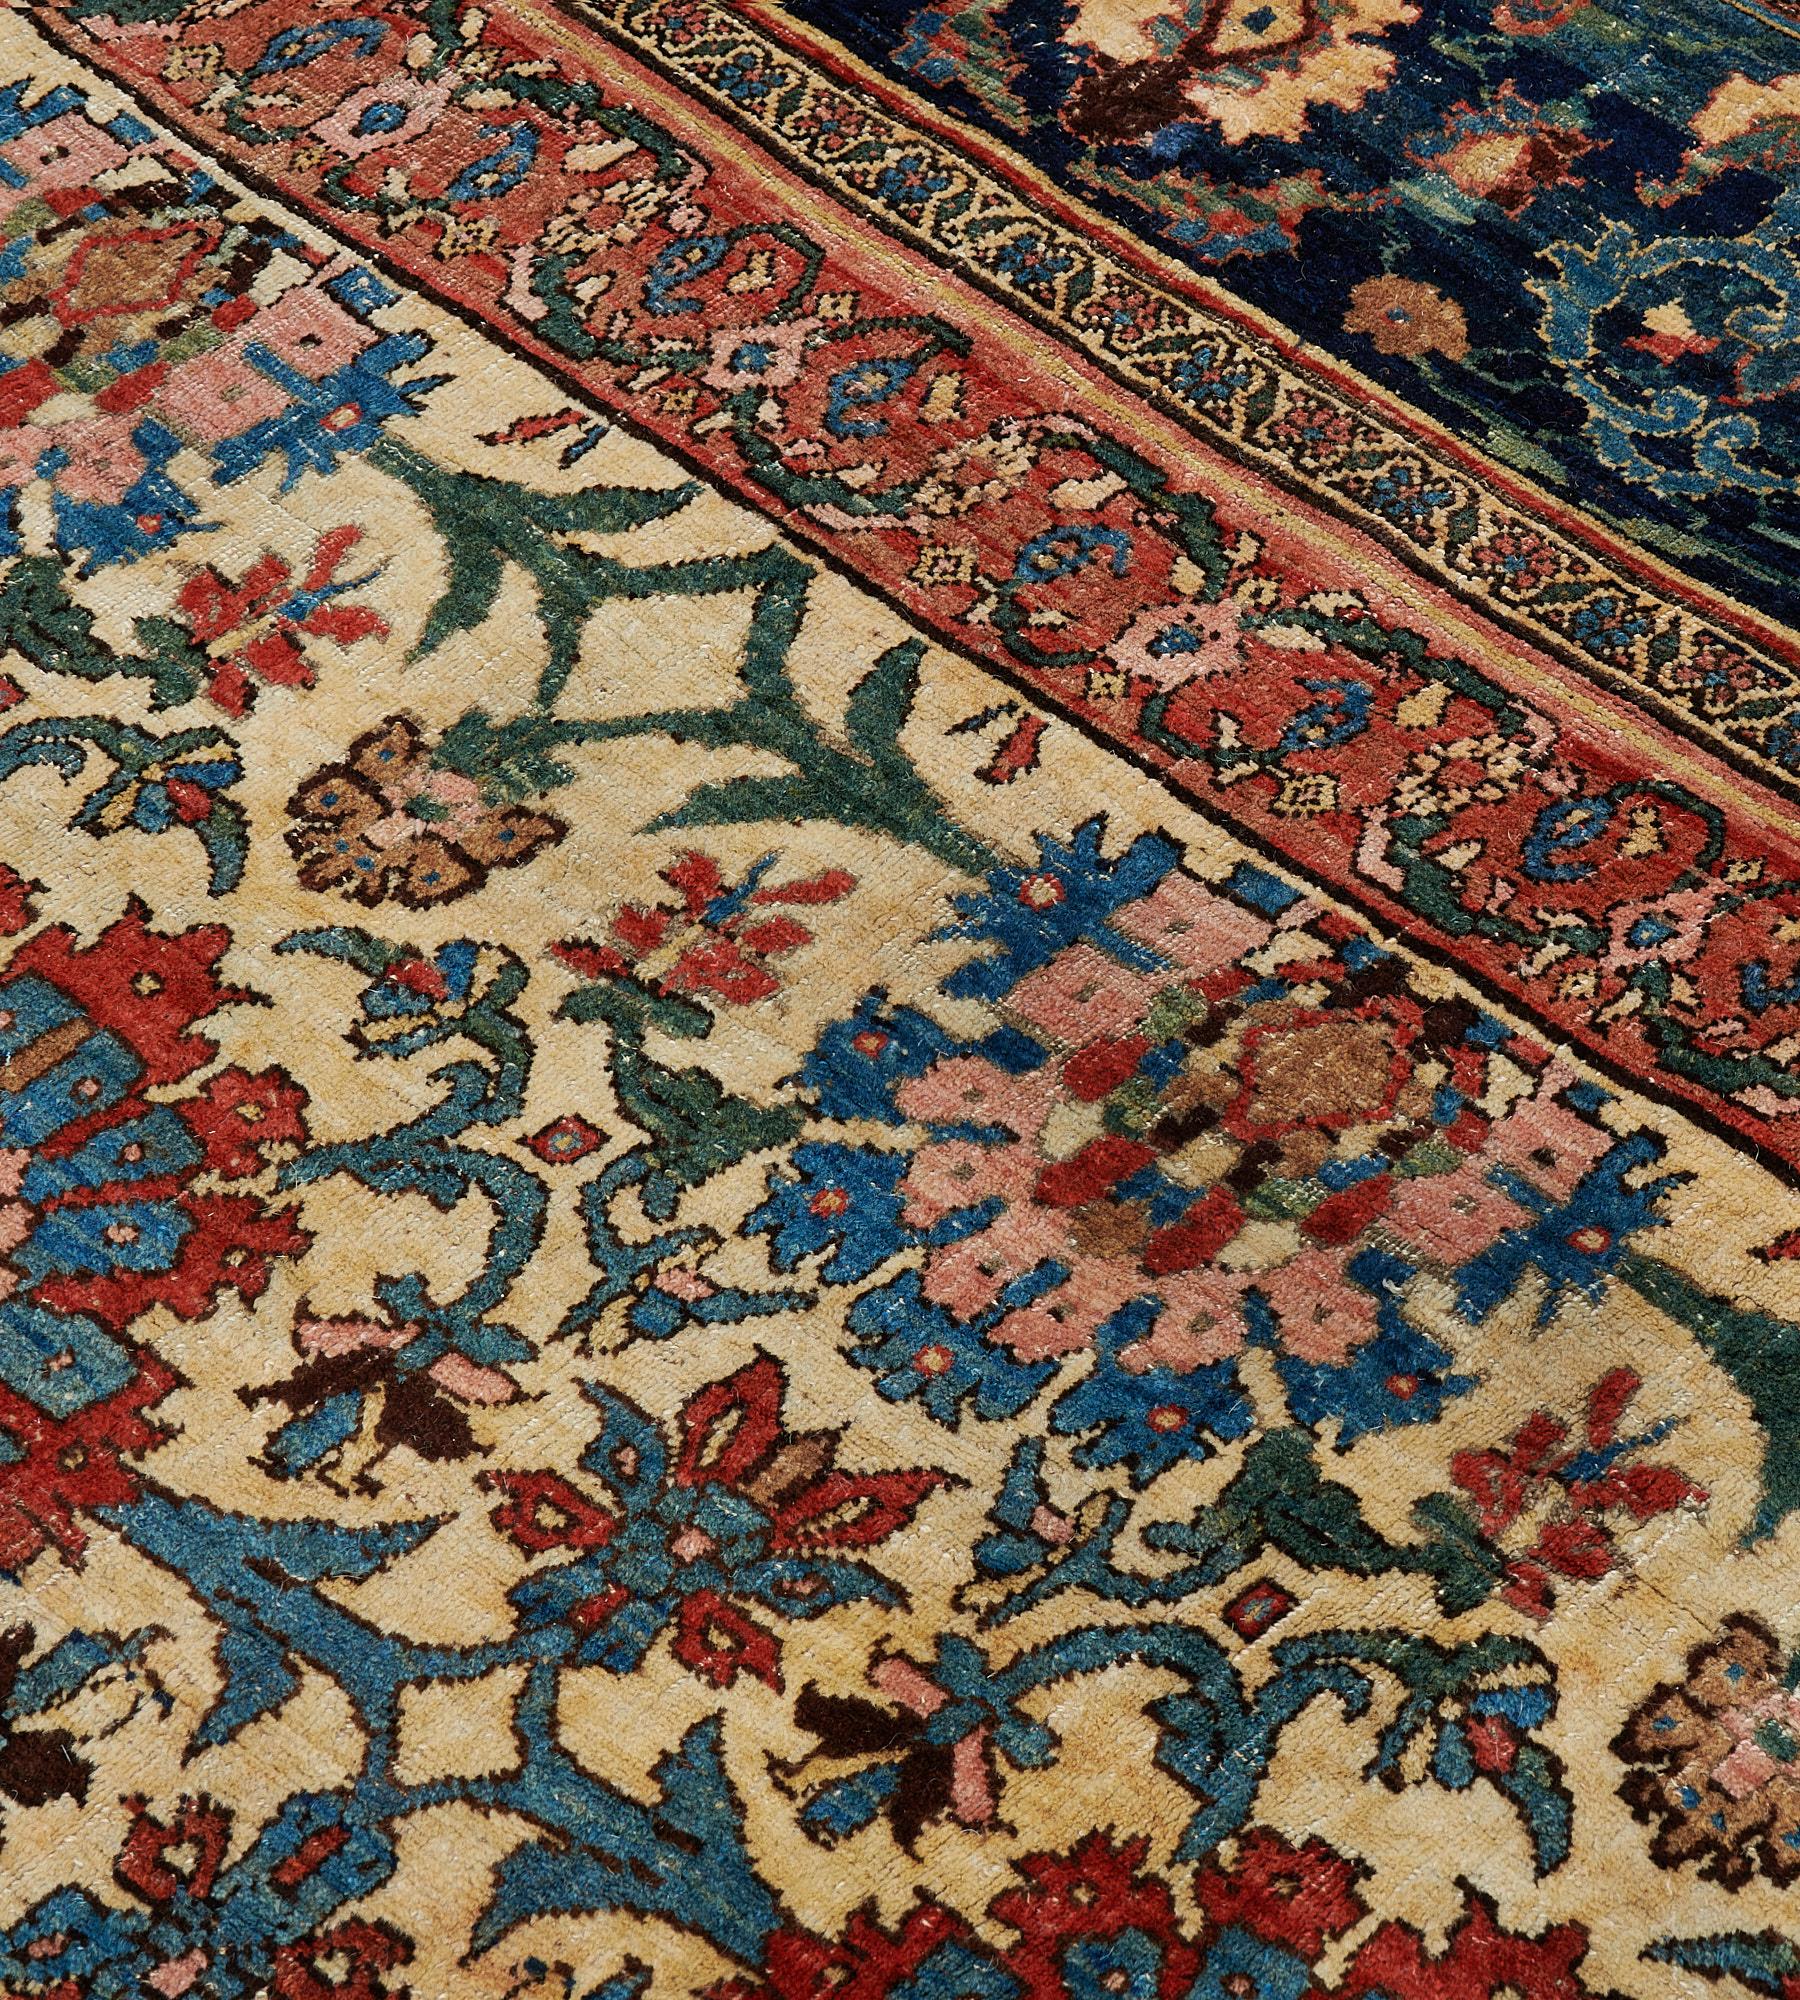 Wool Hand-knotted Circa-1880 Floral Antique Persian Bidjar Rug 13'x18'5